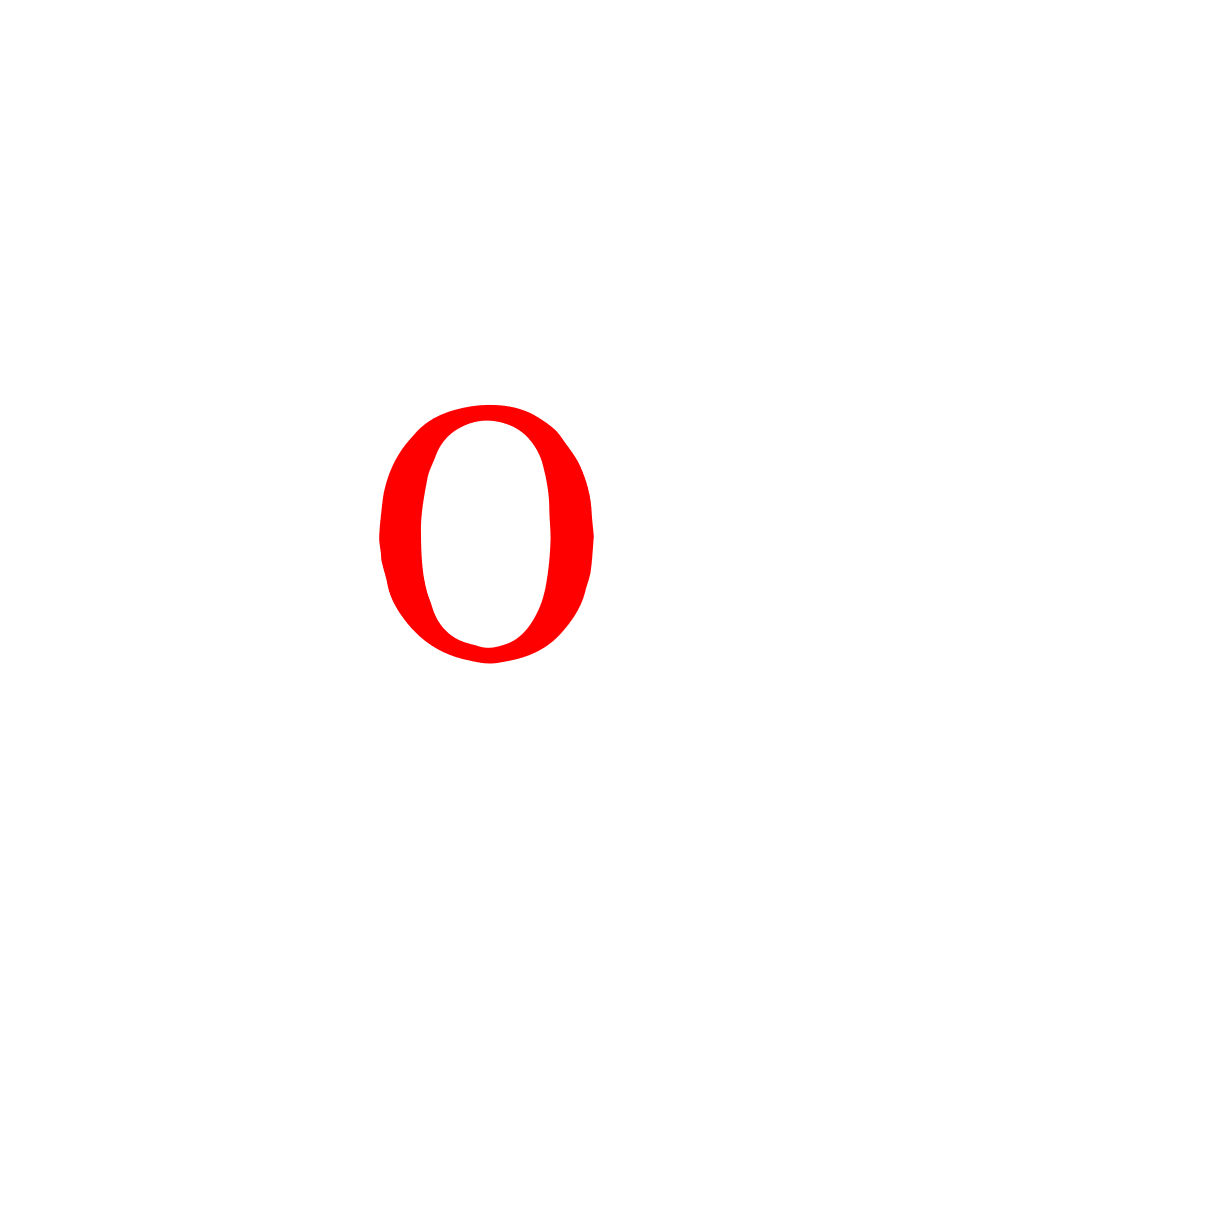 MORX firefighting